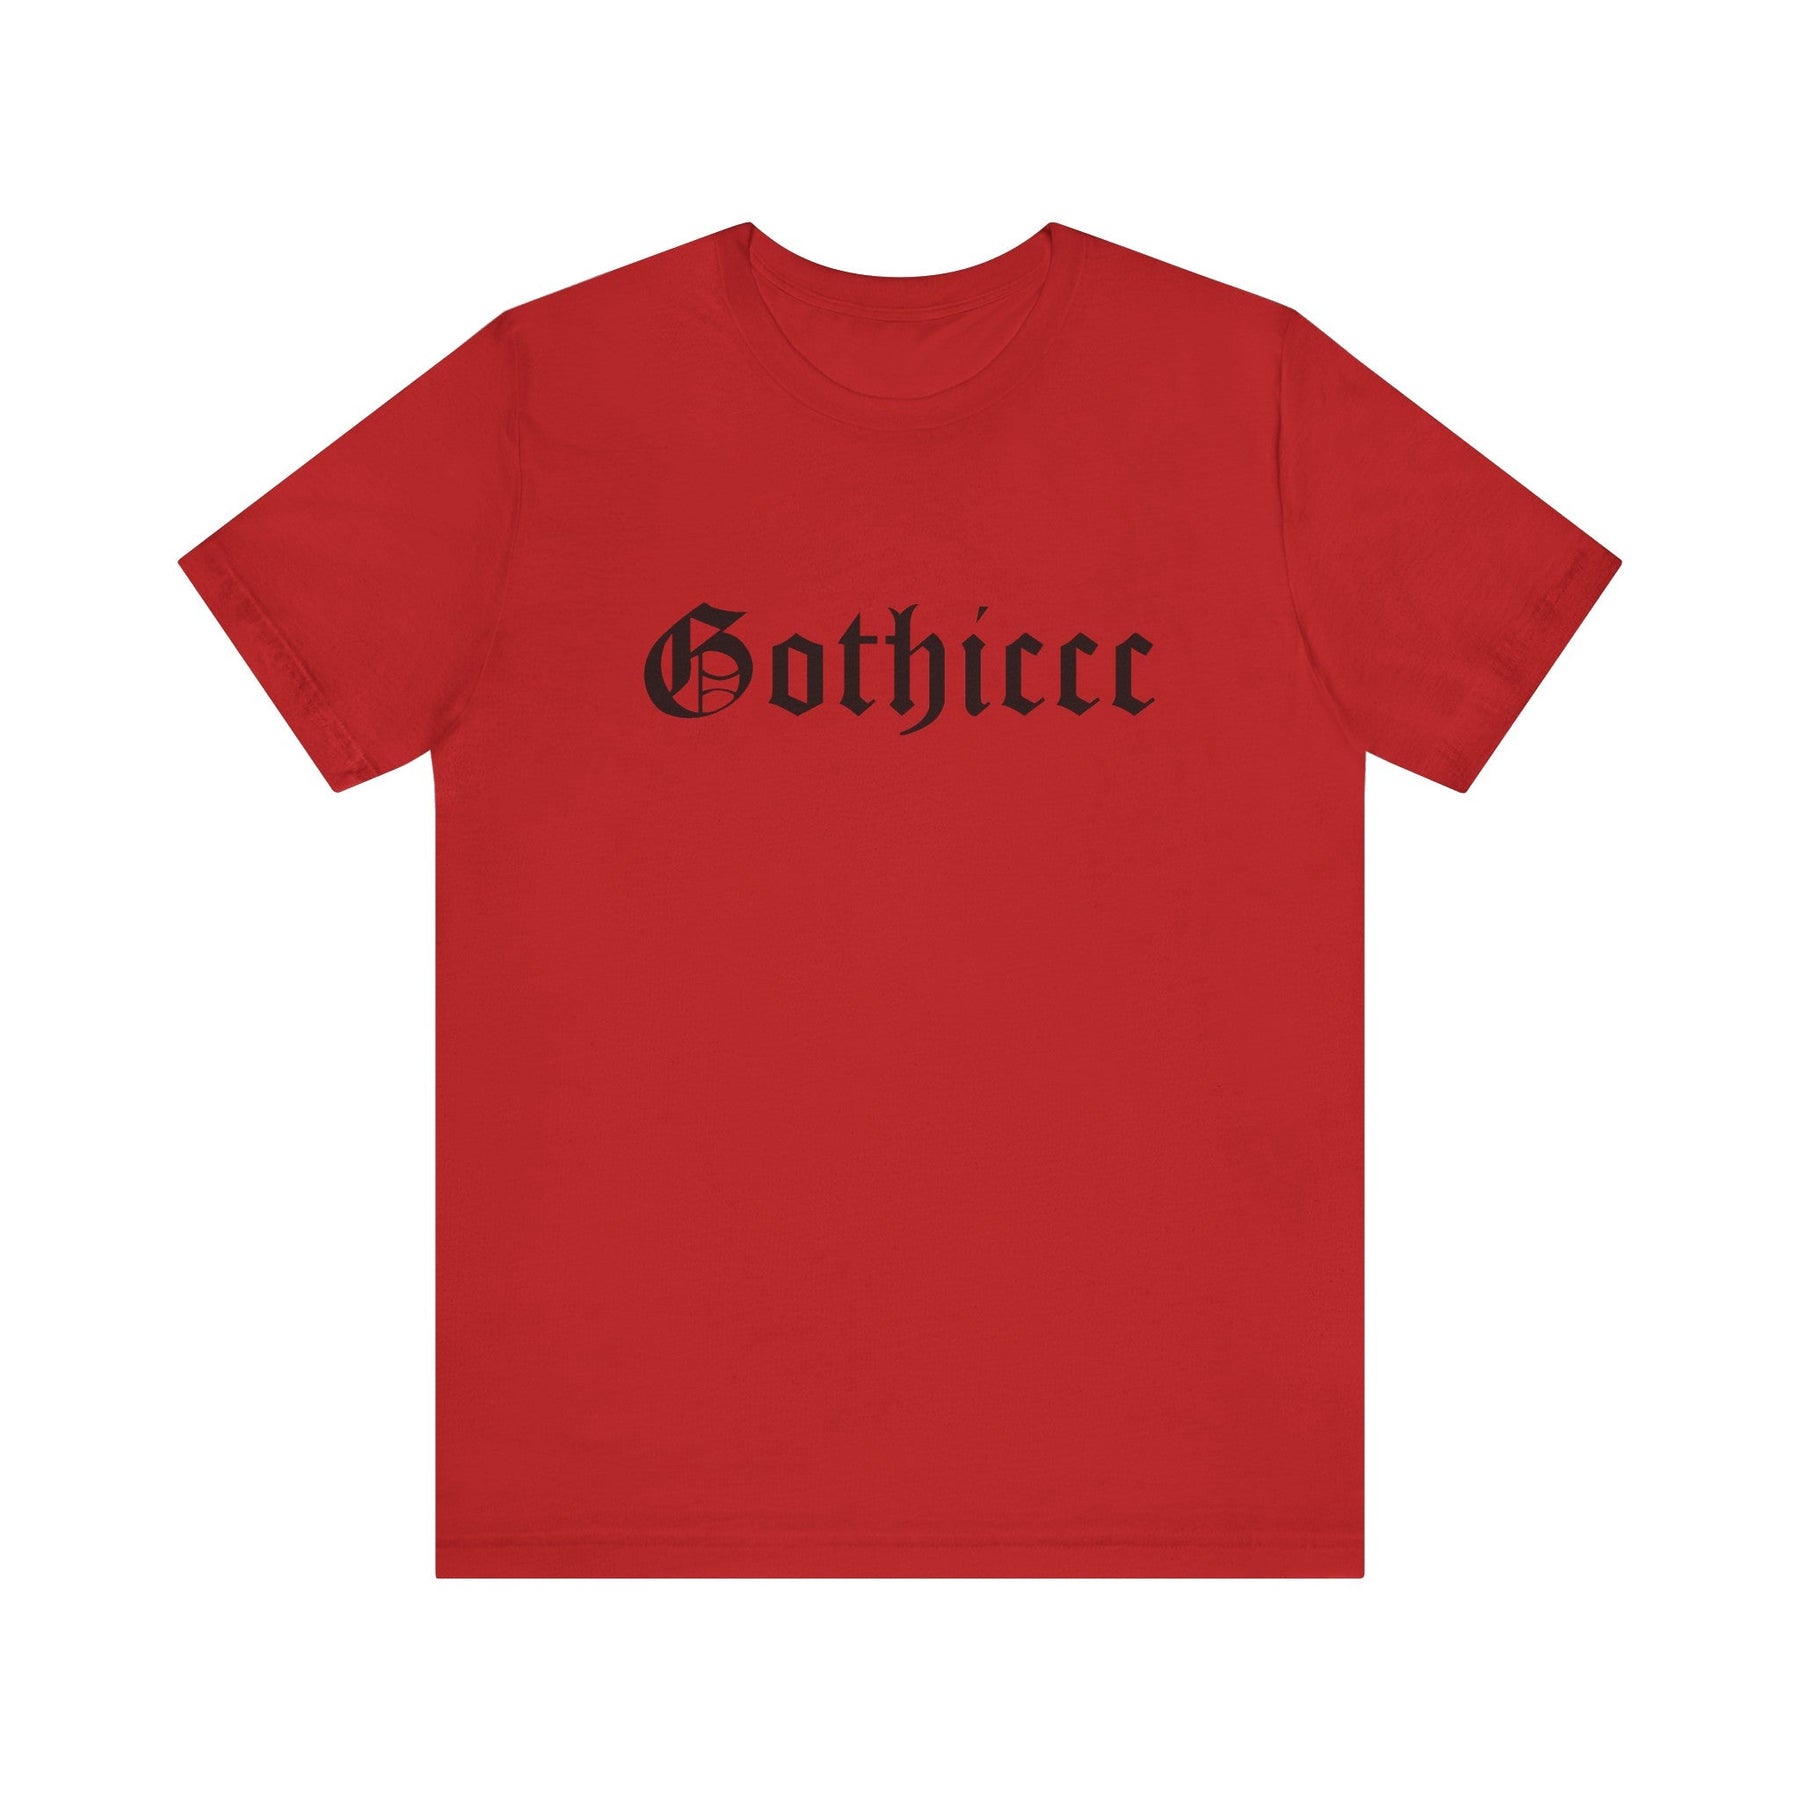 Gothiccc Large Font T - Shirt - Goth Cloth Co.T - Shirt12661592452077342328